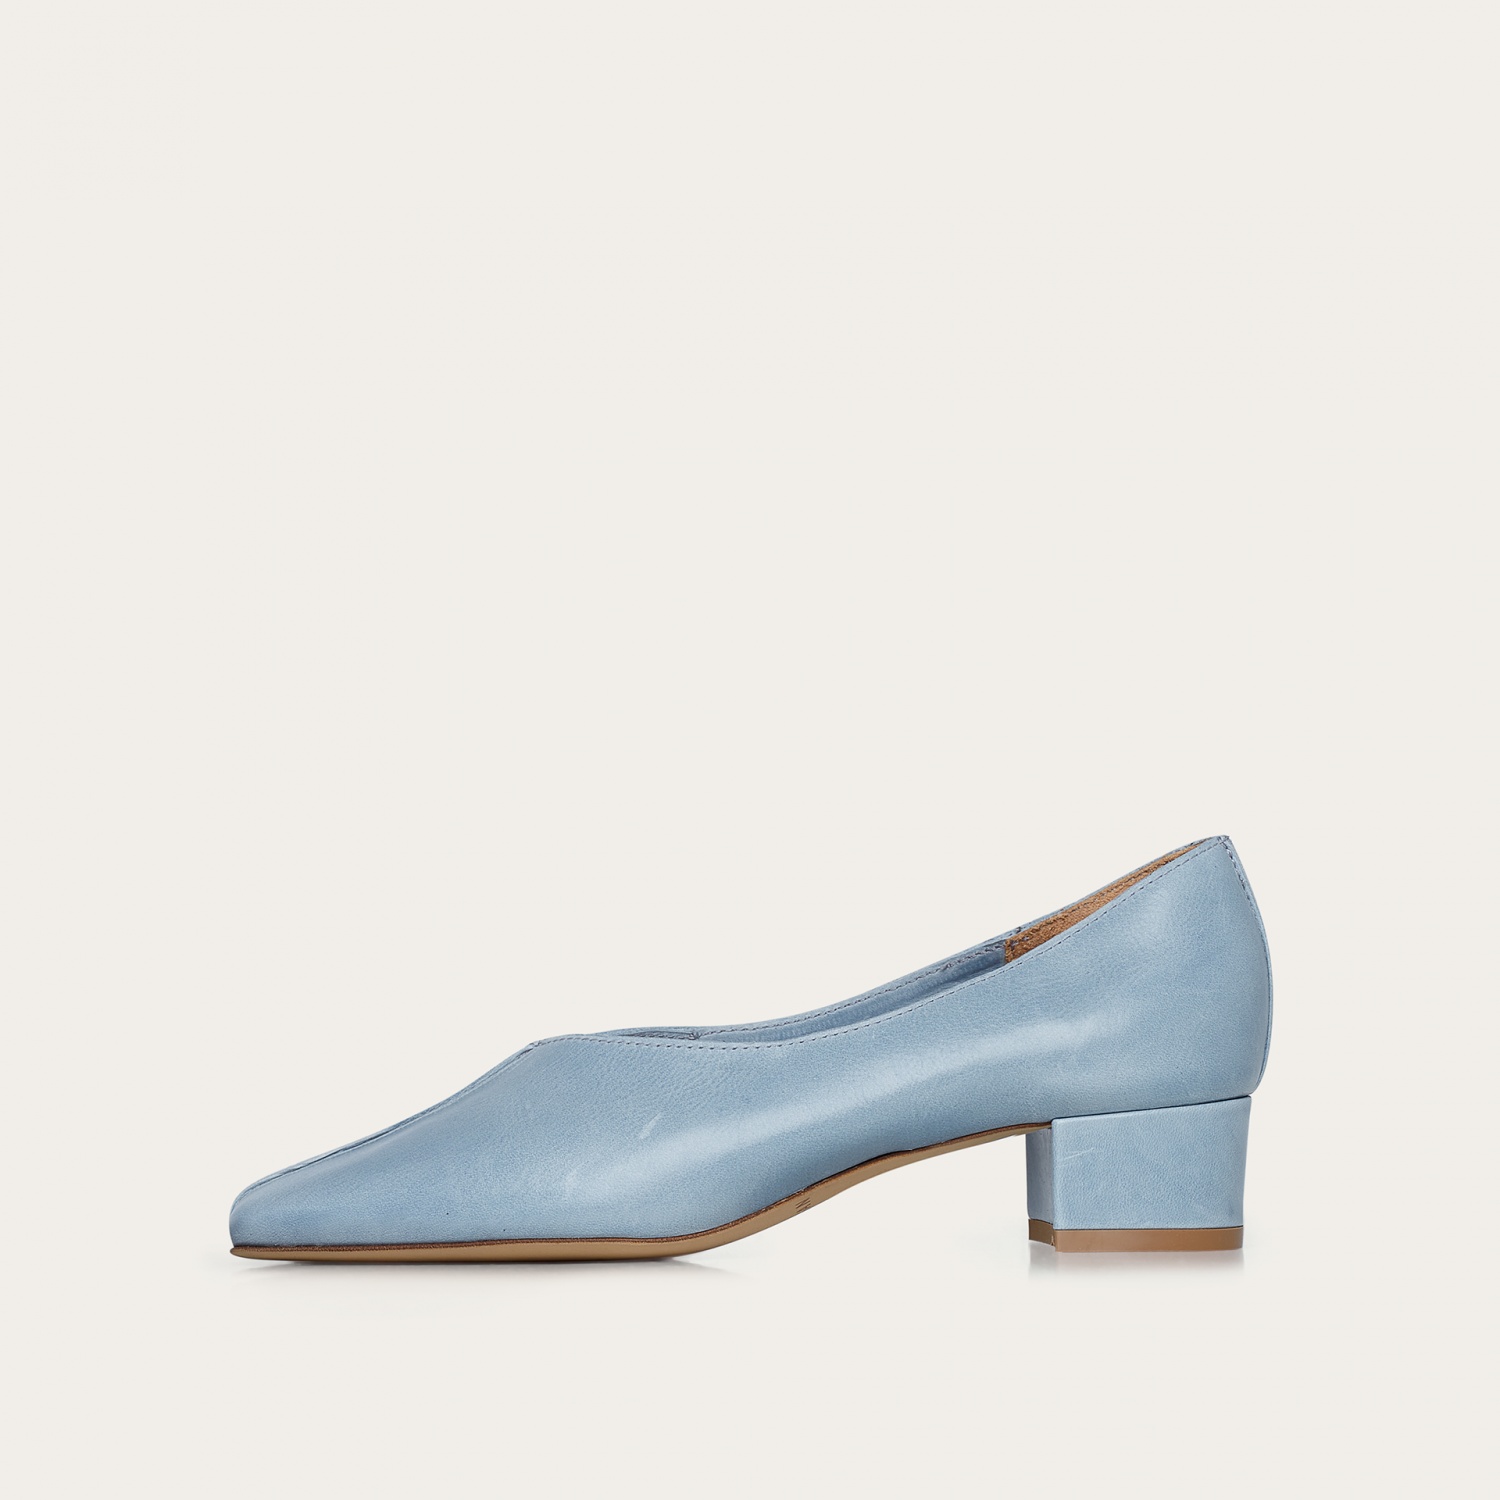  Apulia Heels, ash blue-0 